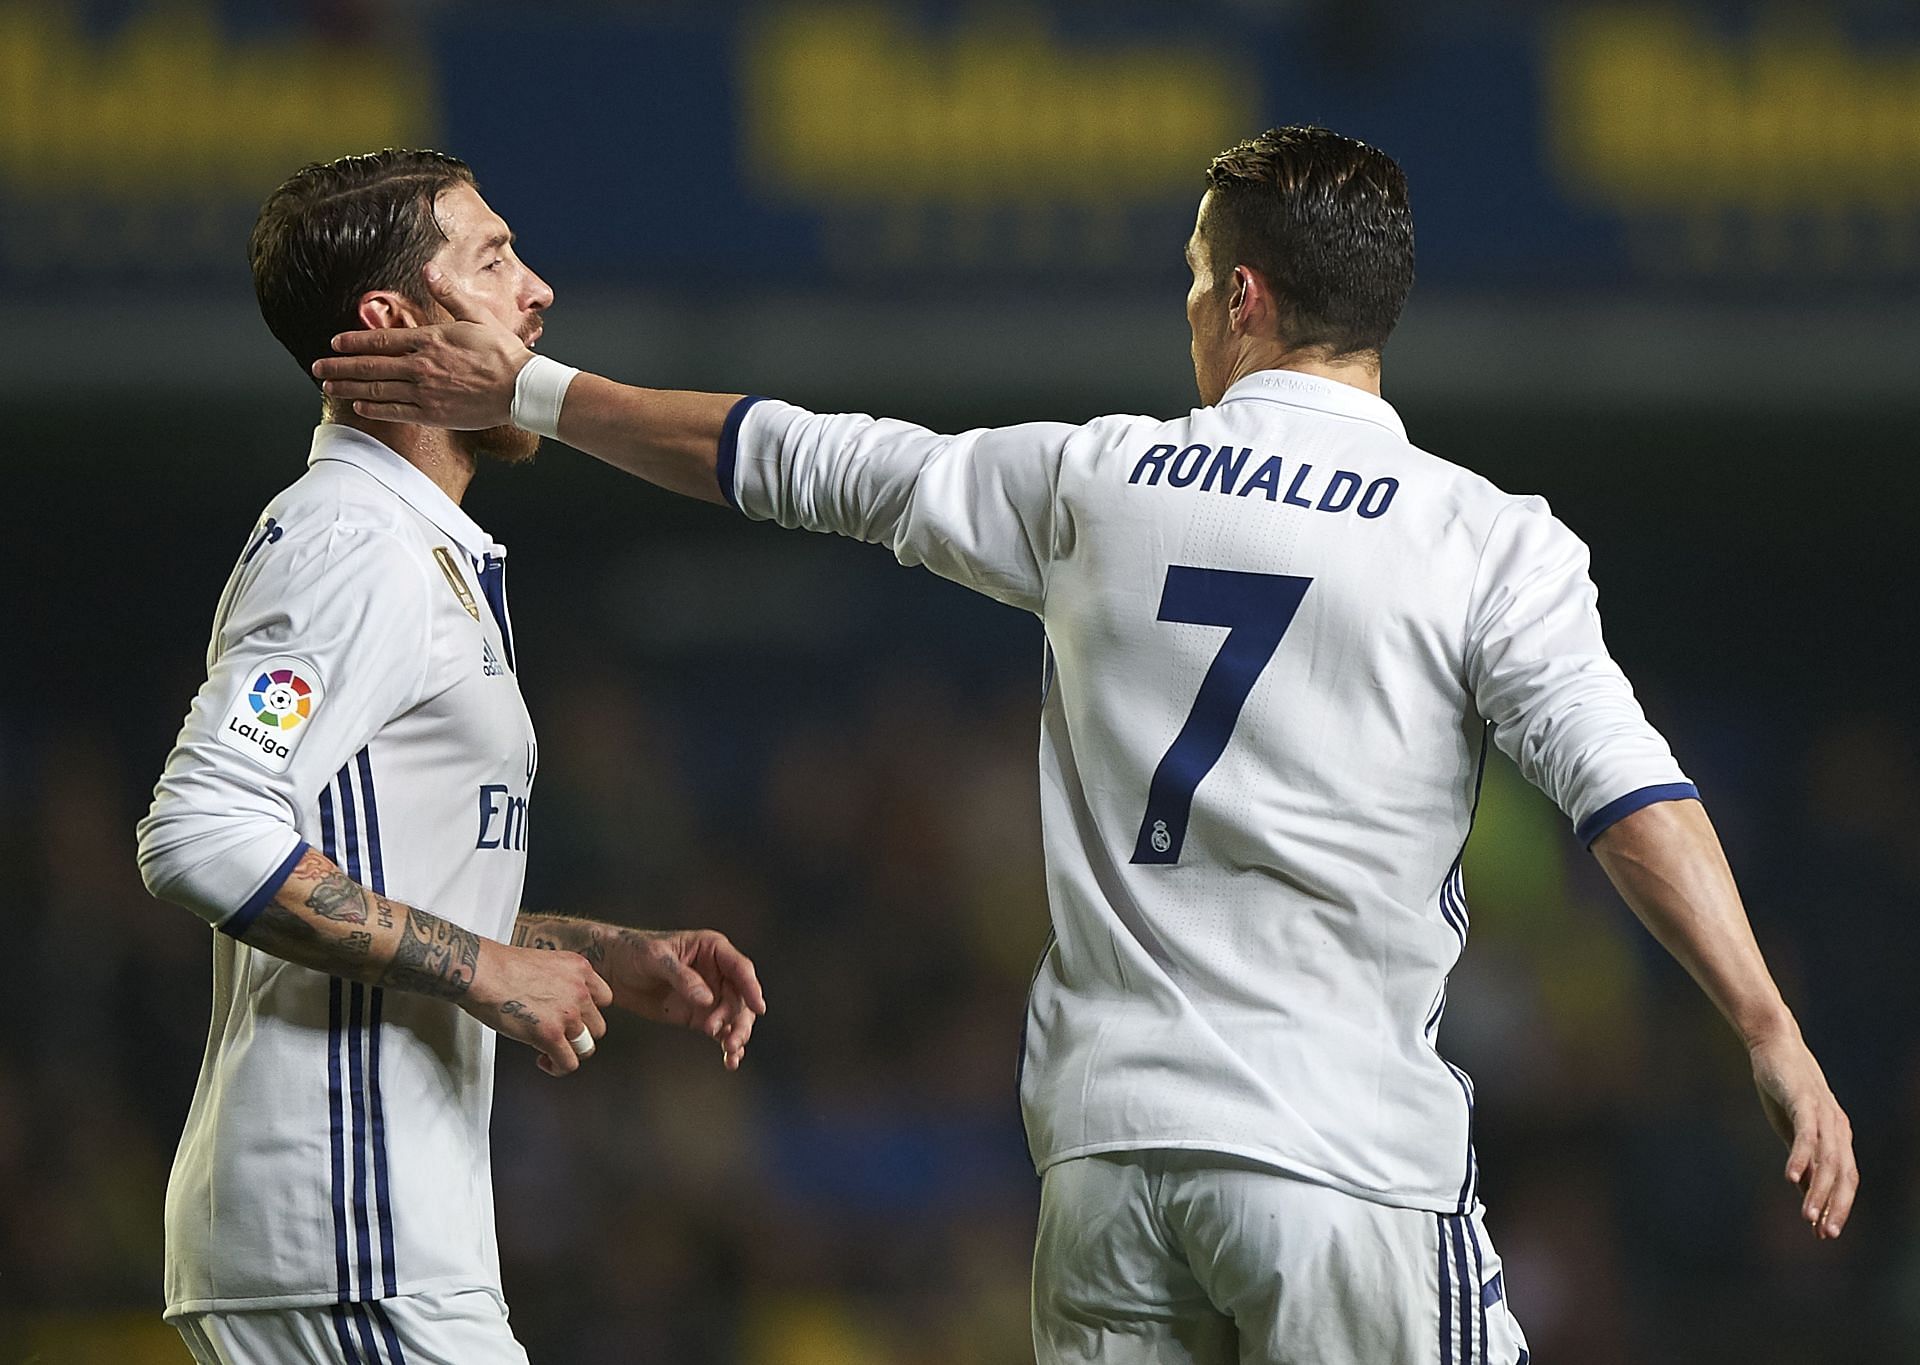 Ronaldo (right) joked with Ramos.